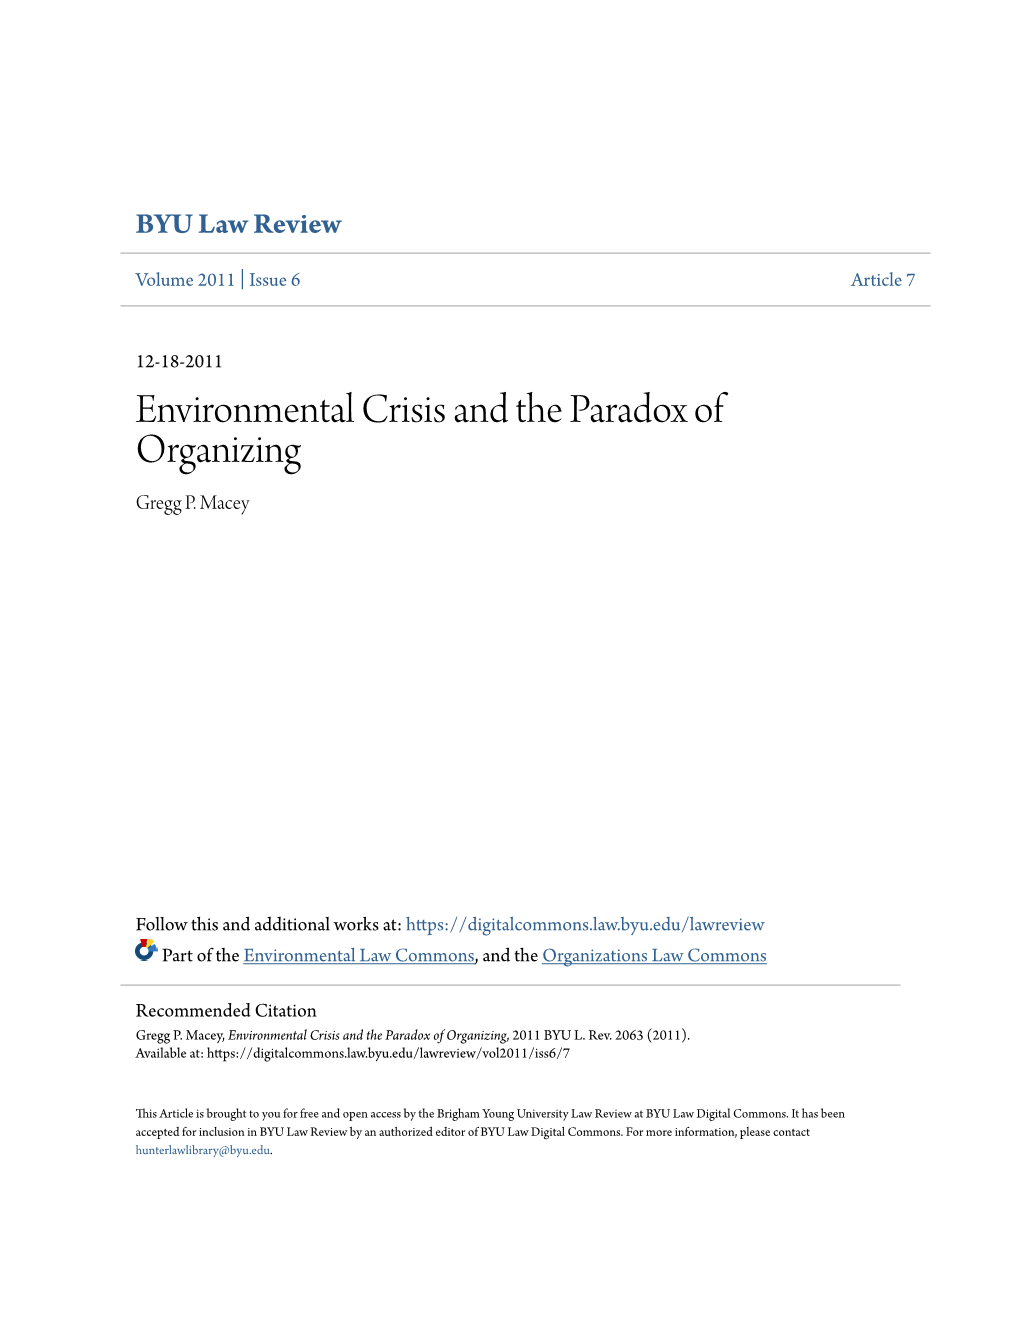 Environmental Crisis and the Paradox of Organizing Gregg P